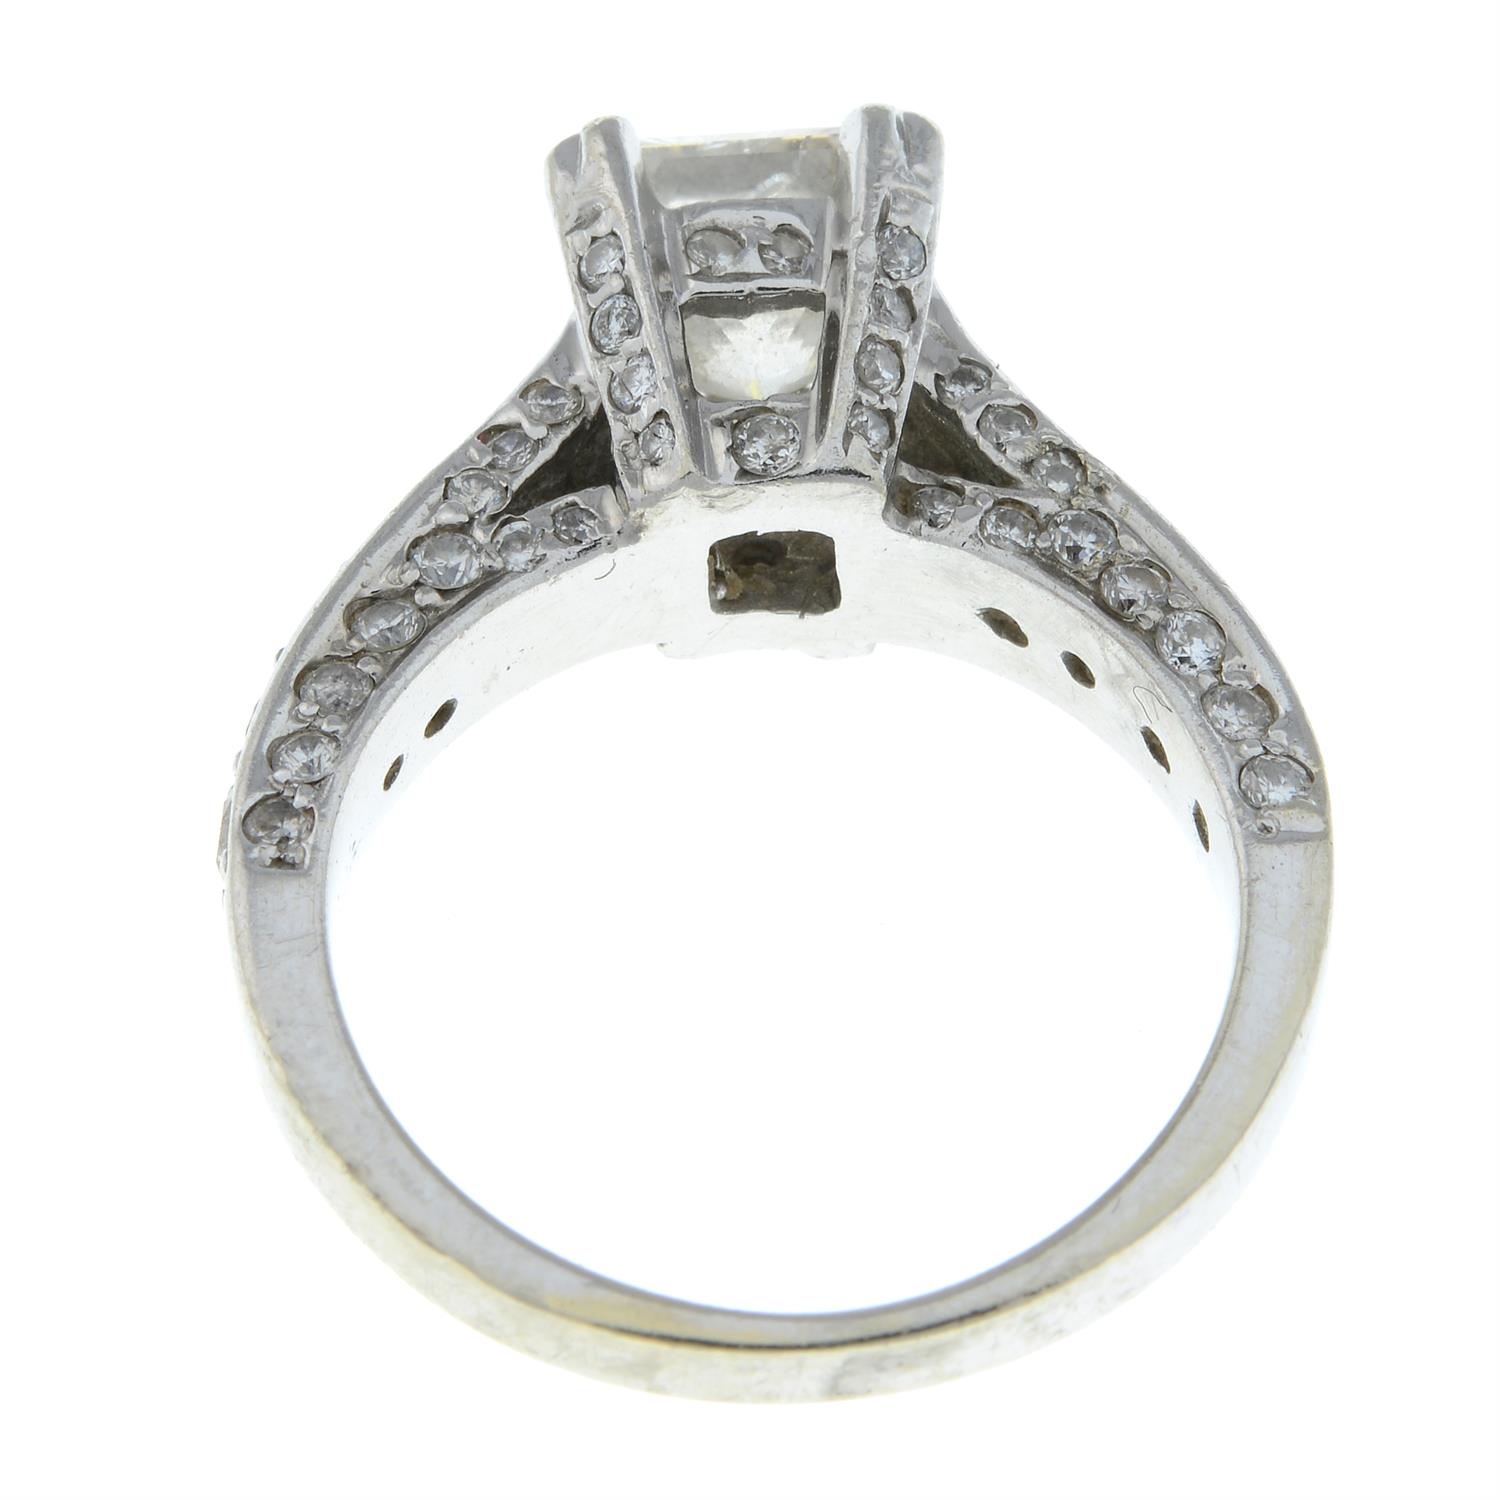 Rectangular-shape diamond ring - Image 2 of 6